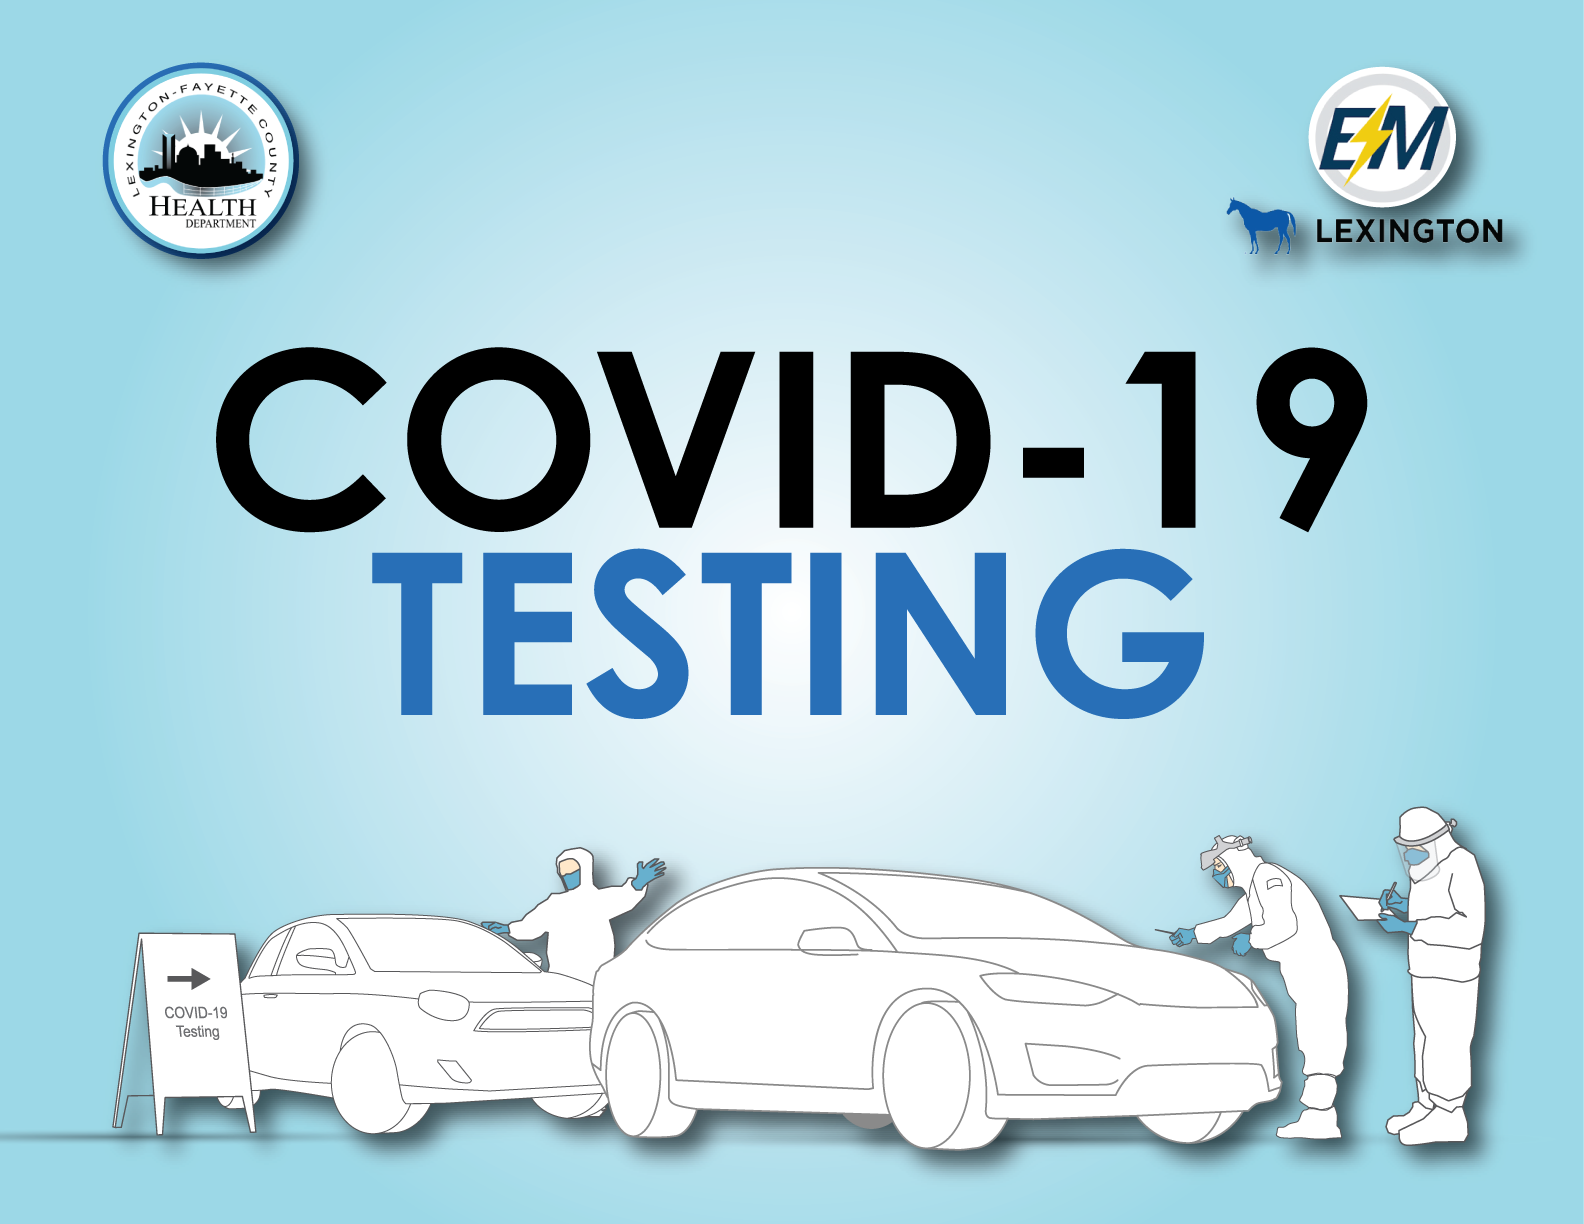 Lexington offers more free COVID-19 testing